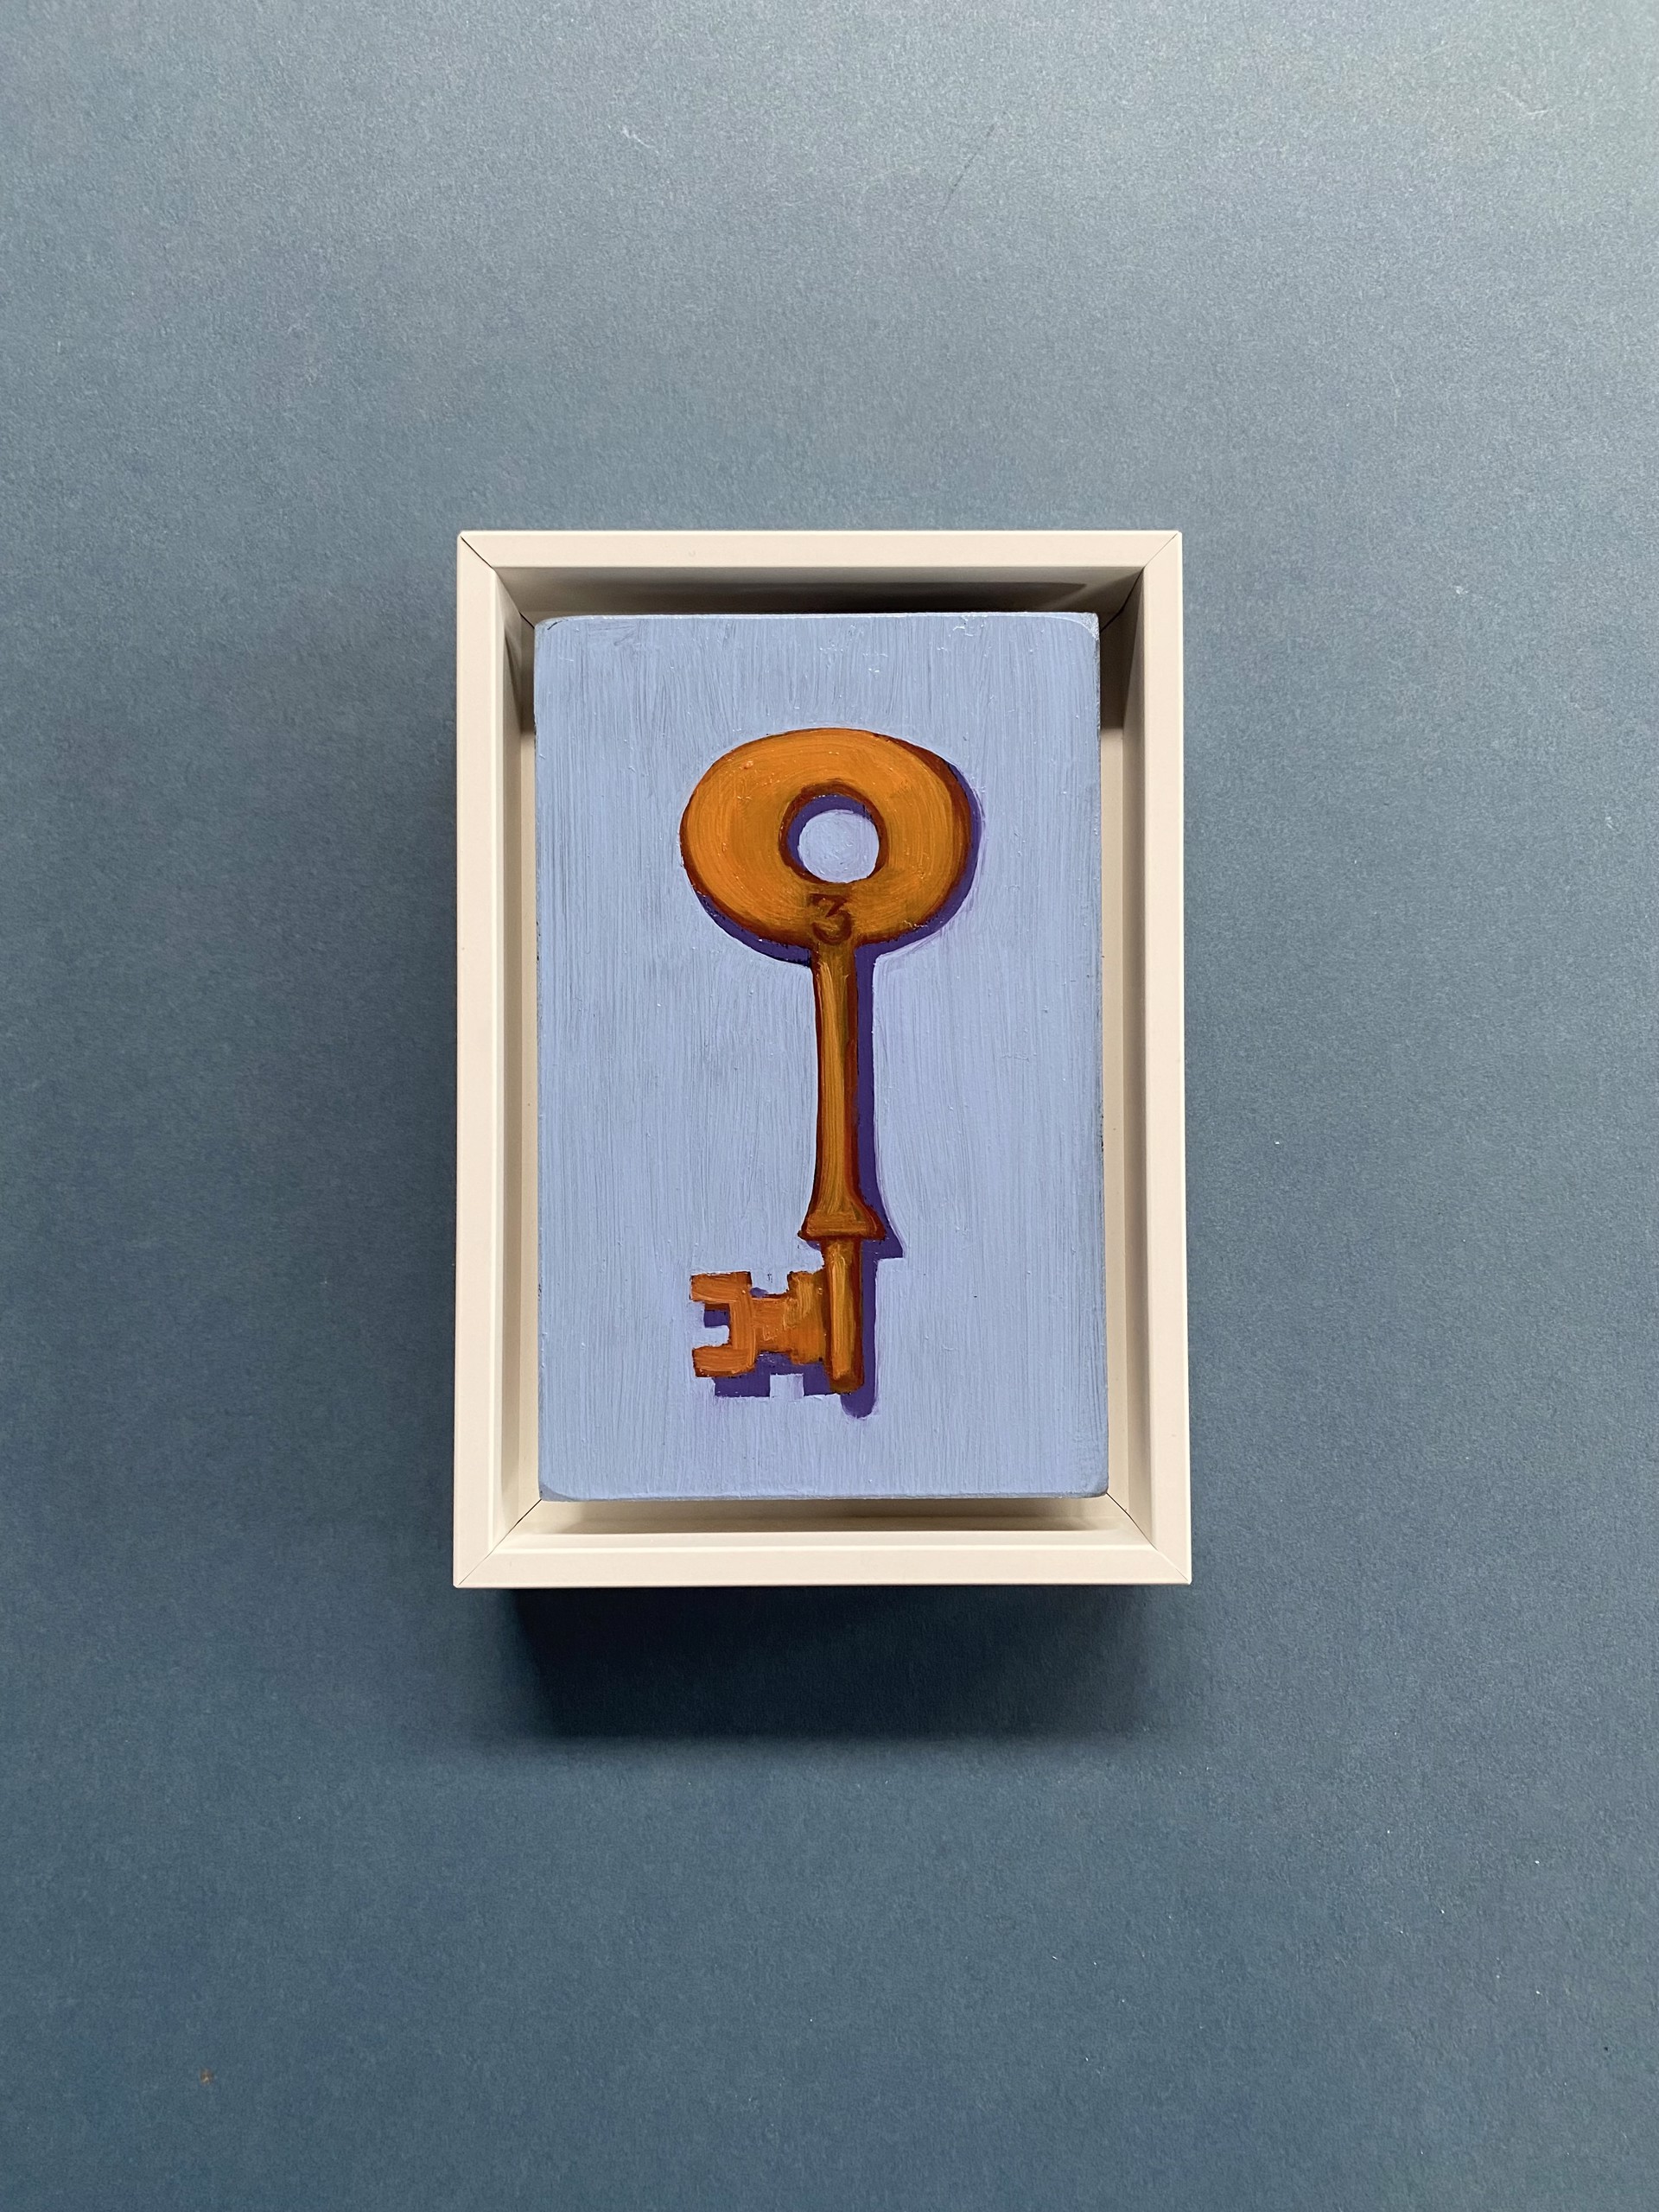 Key No. 47 by Stephen Wells